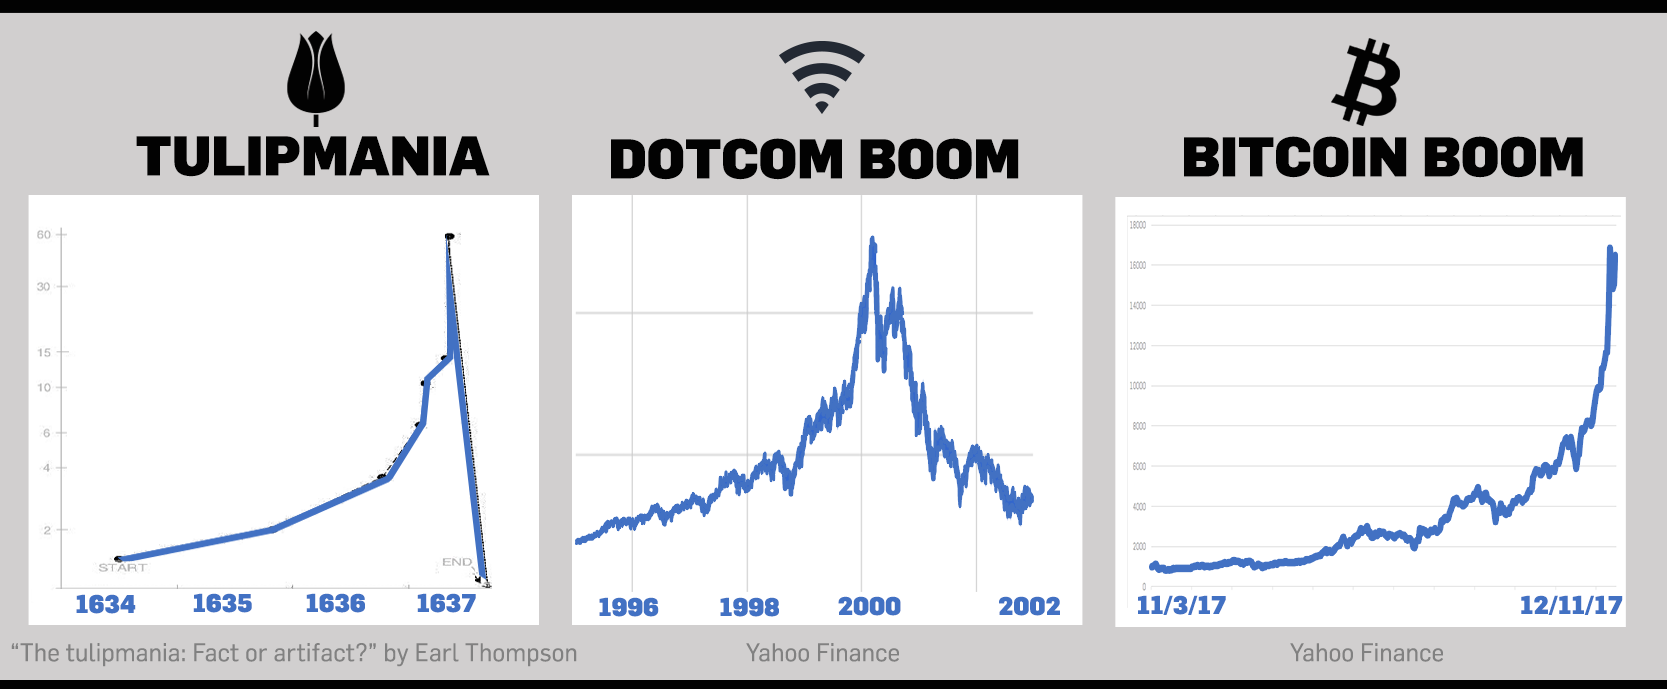 dot com bubble chart vs bitcoin